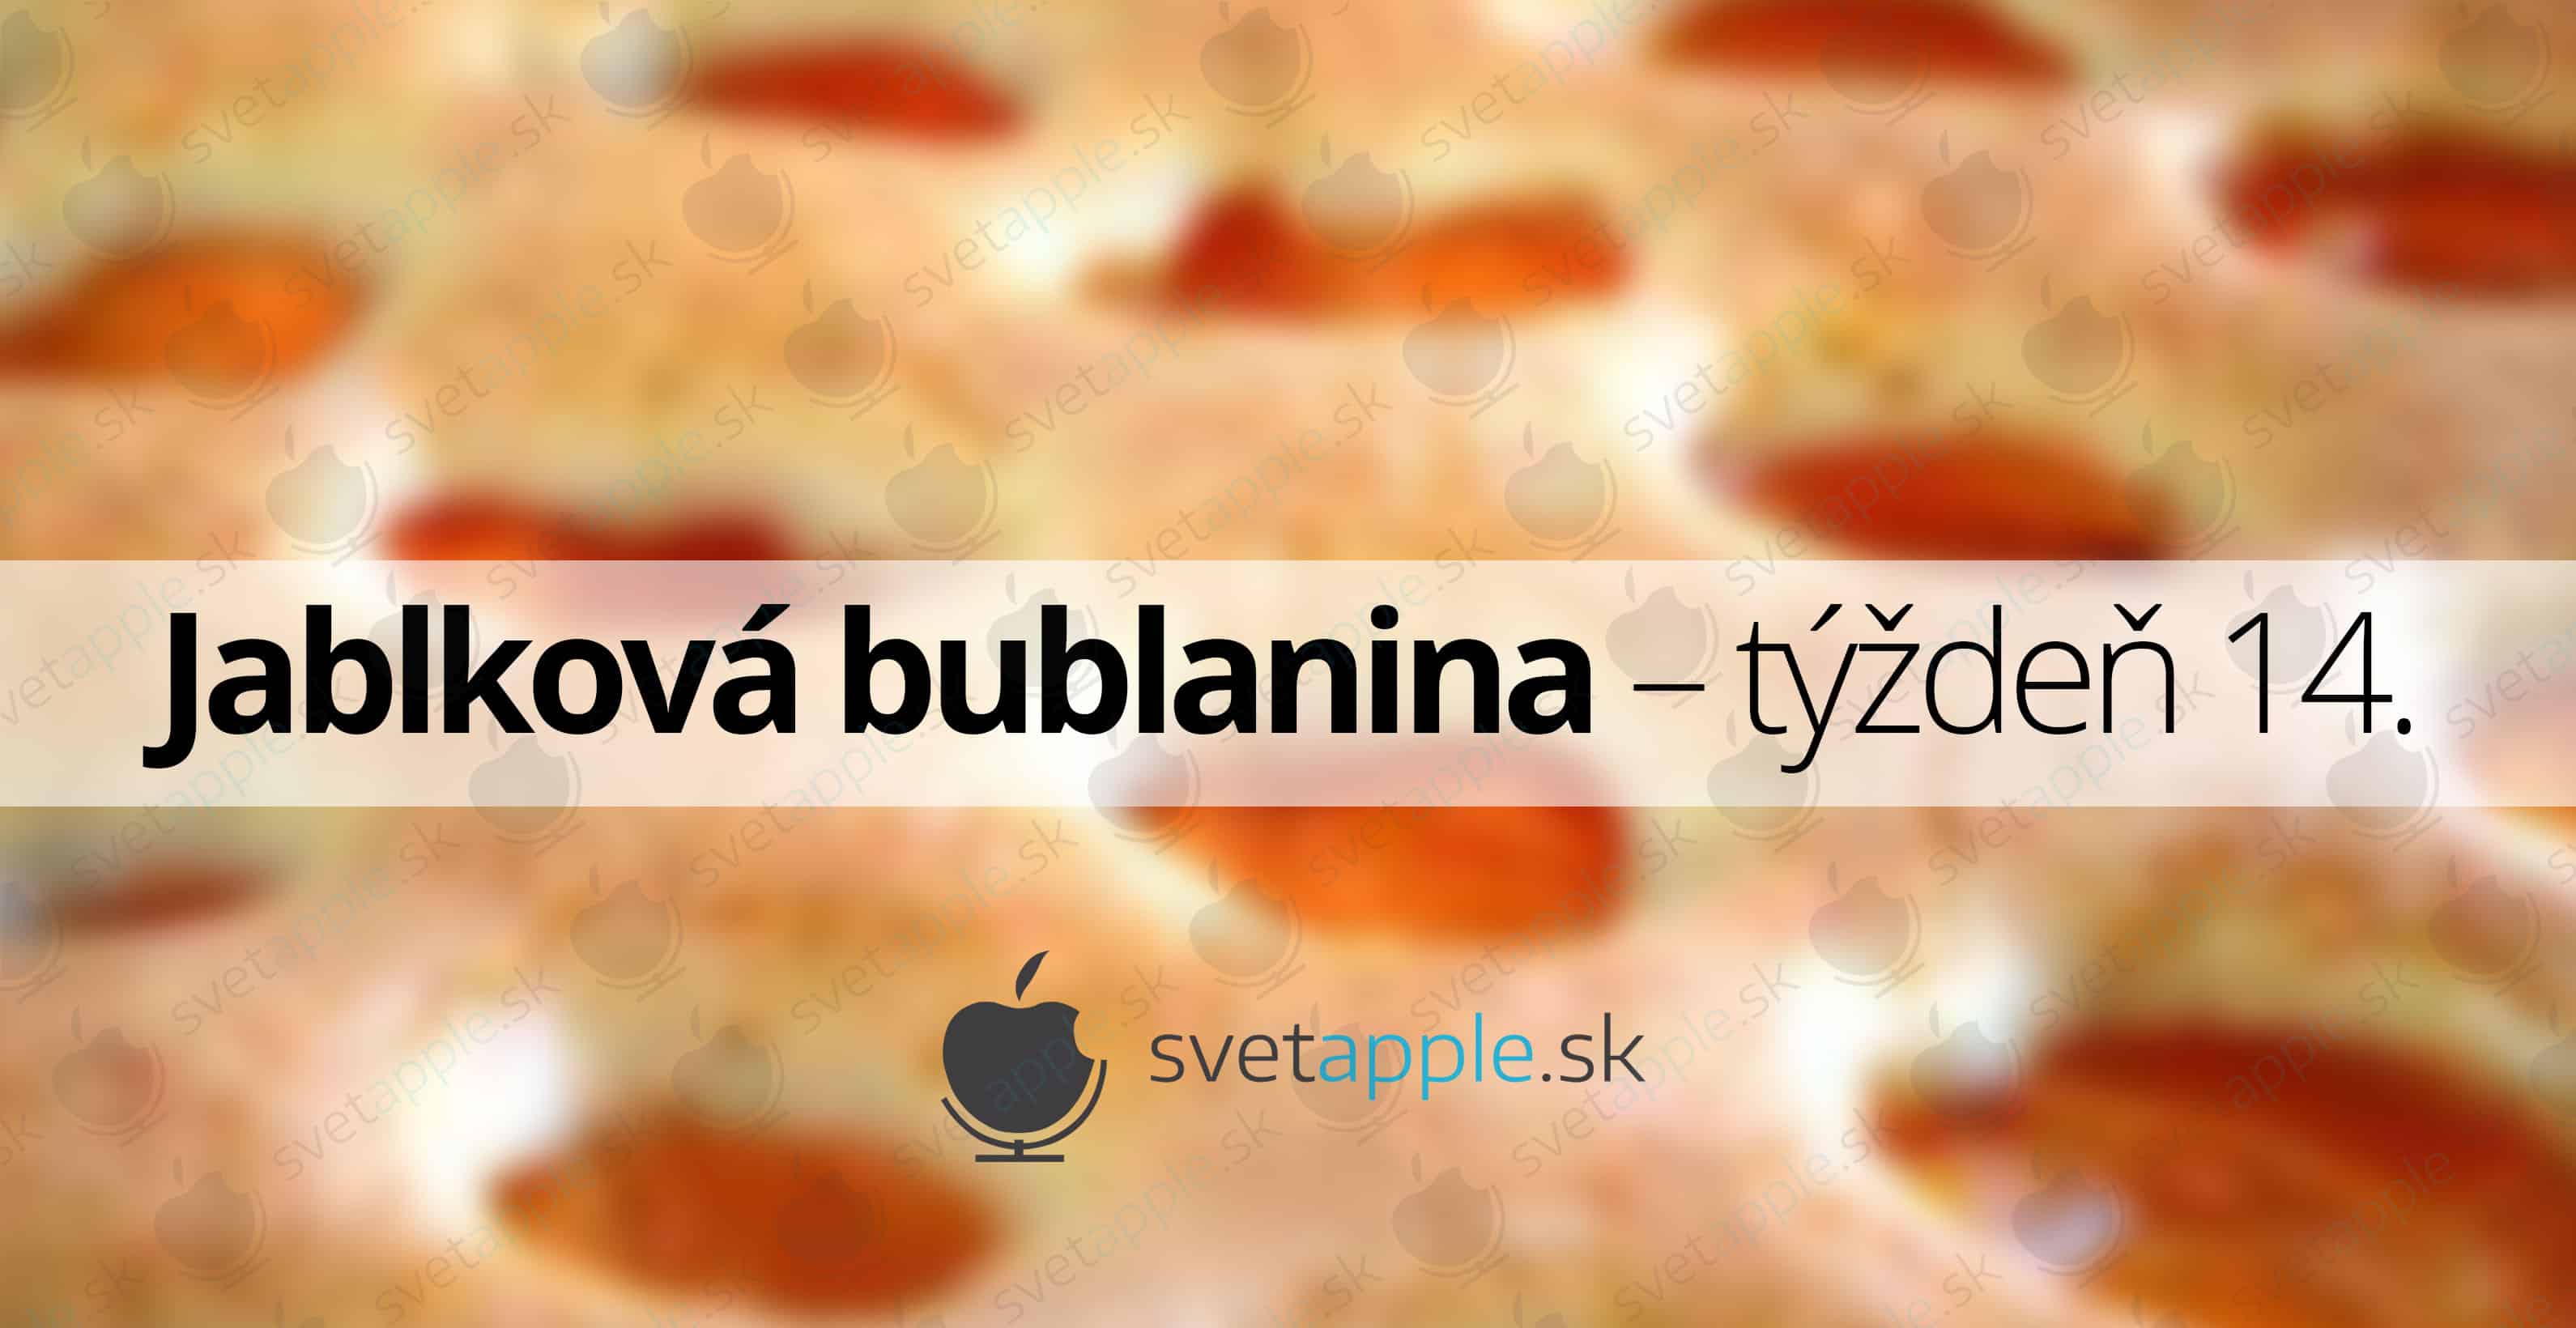 jablkova-bublanina-14---titulná-fotografia---SvetApple